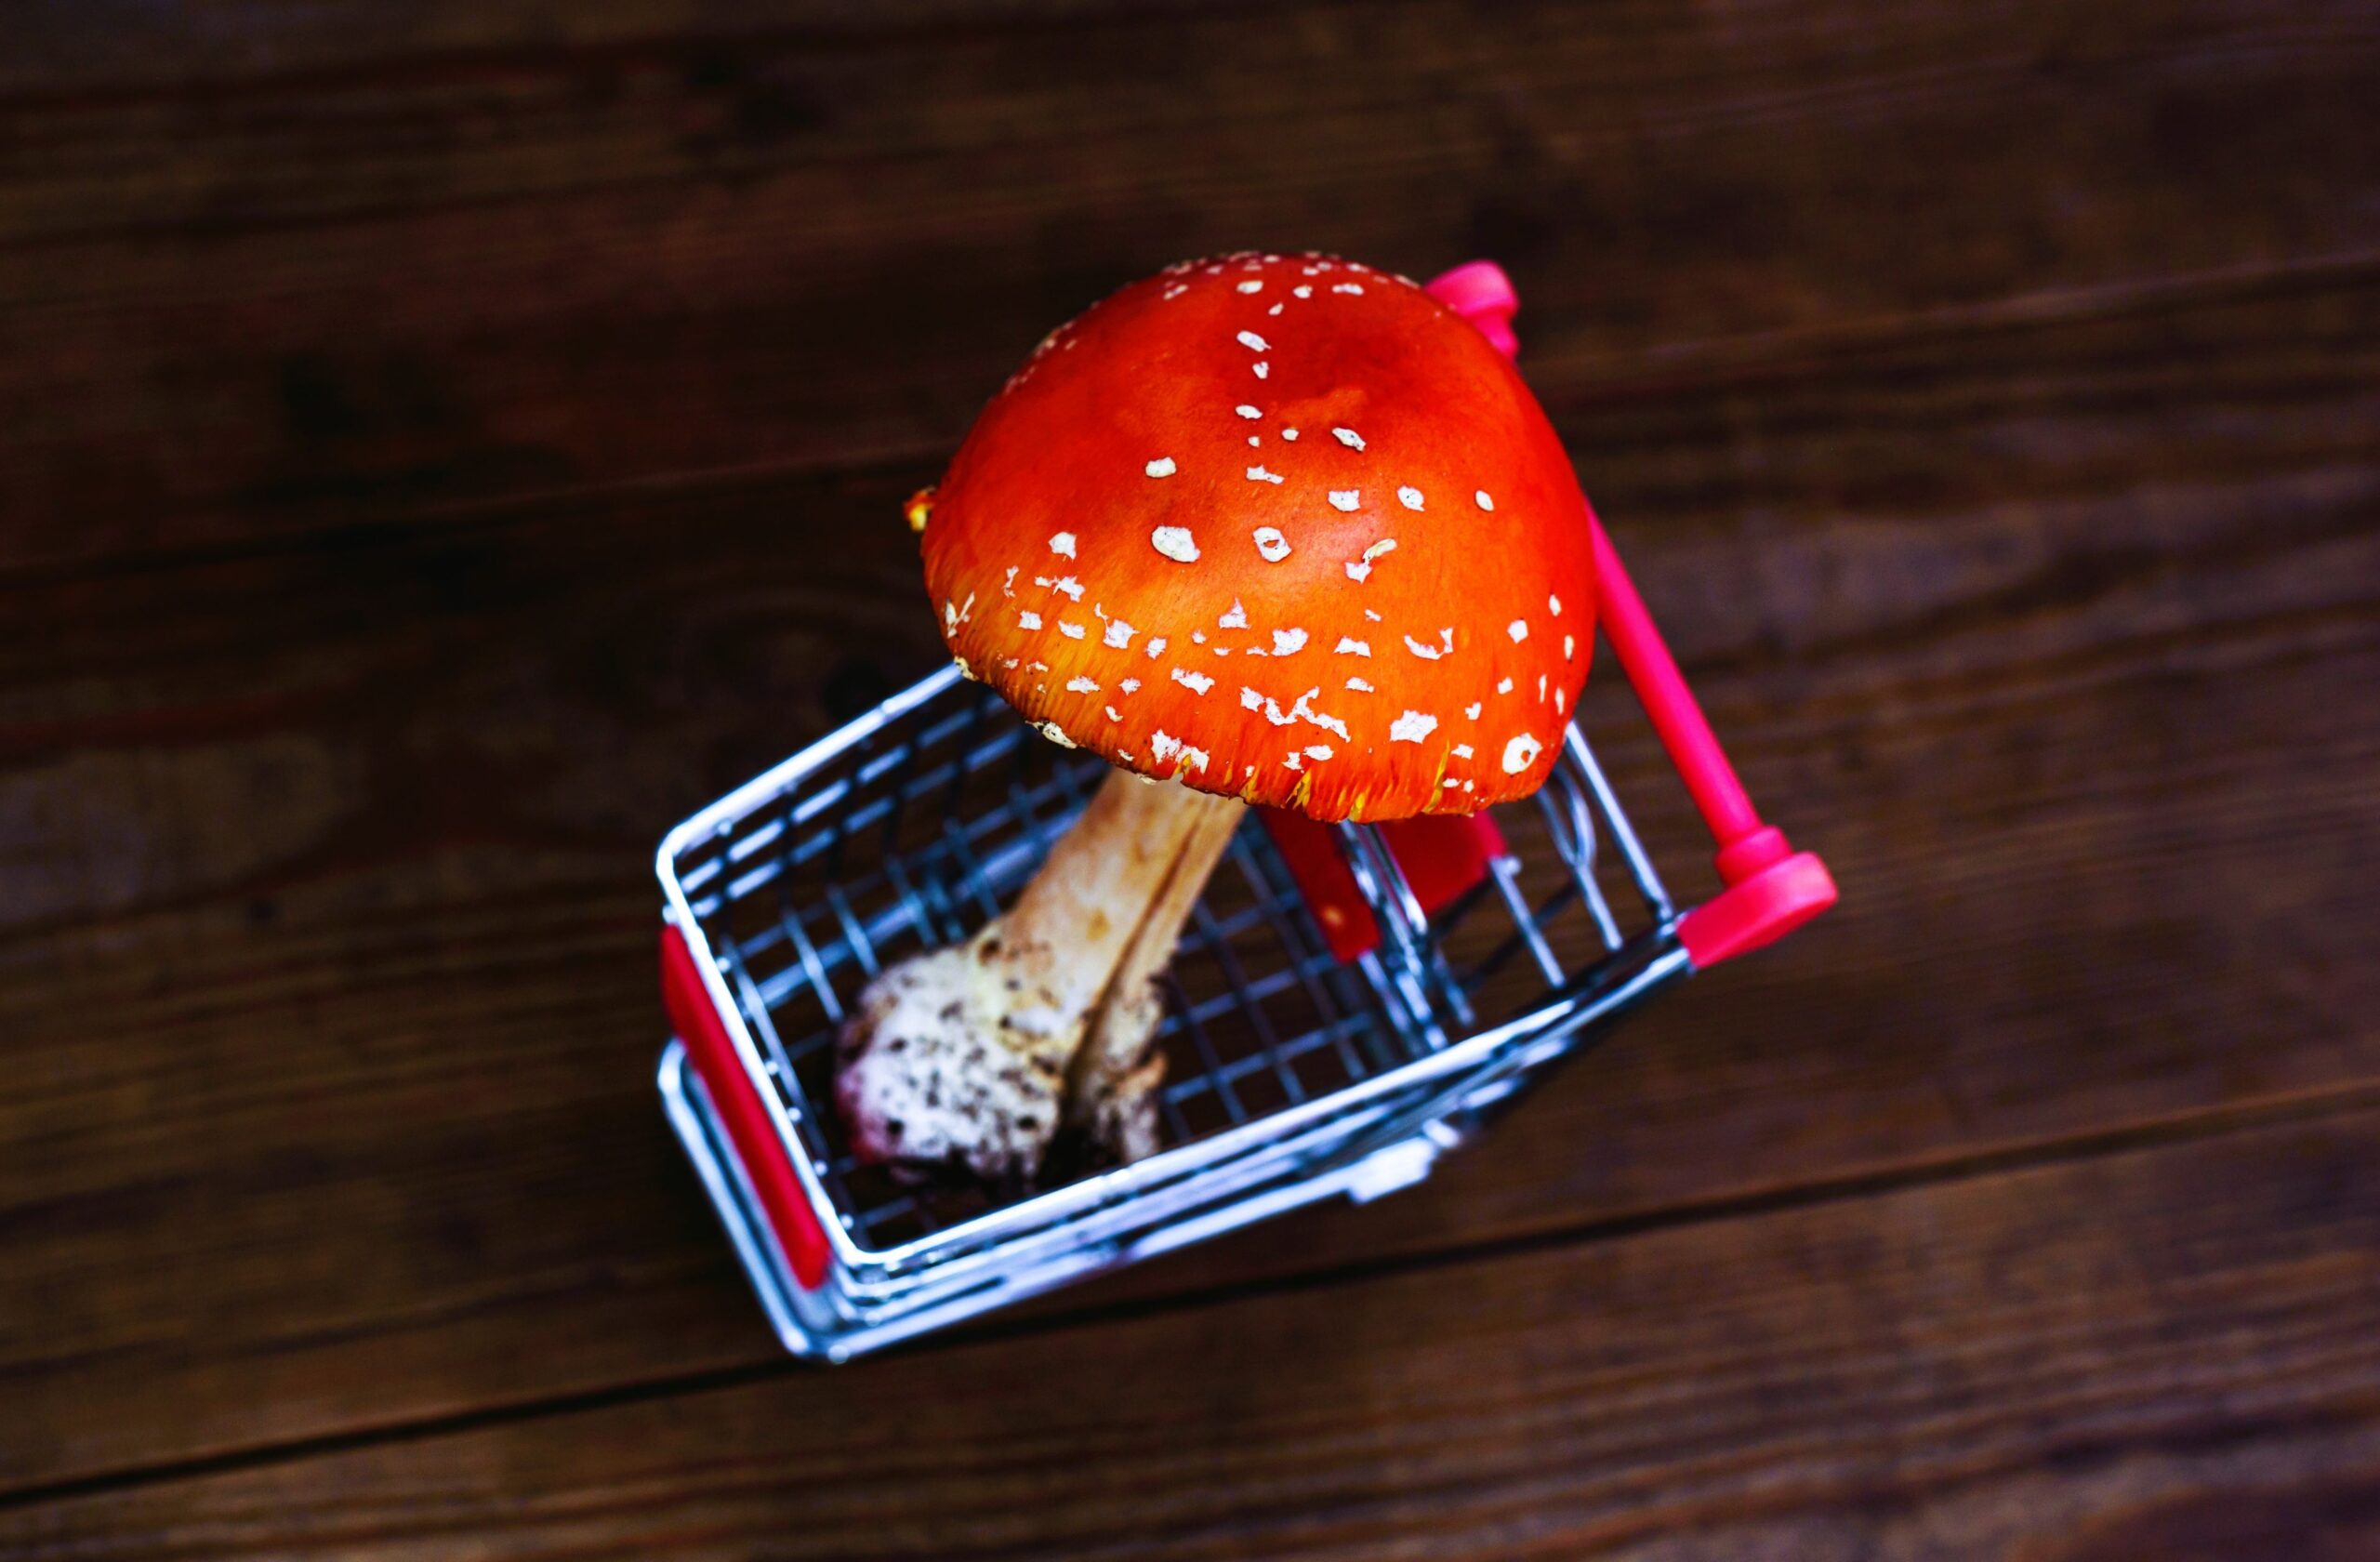 Red Amanita Muscaria mushroom inside of a mini shopping cart